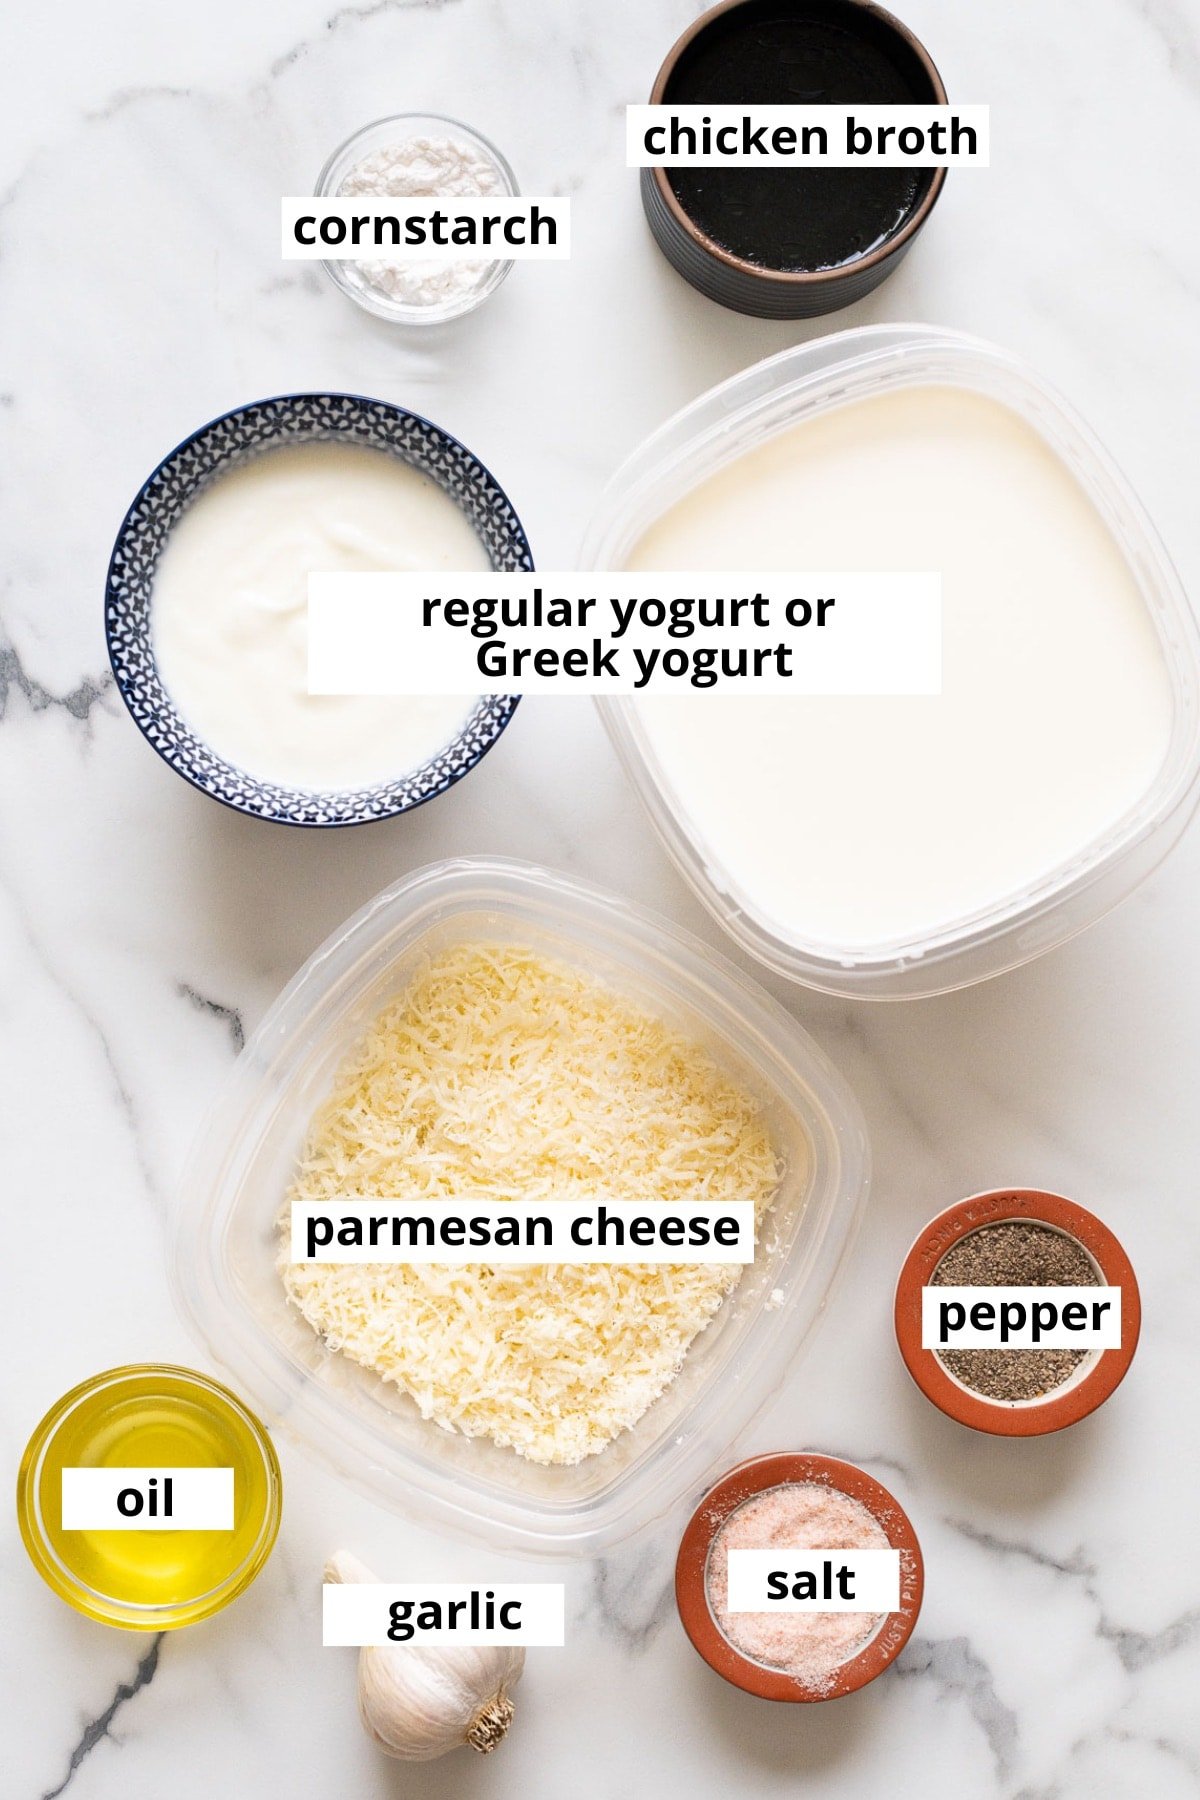 Regular yogurt, Greek yogurt, chicken broth, cornstarch, parmesan cheese, oil, garlic, salt and pepper.